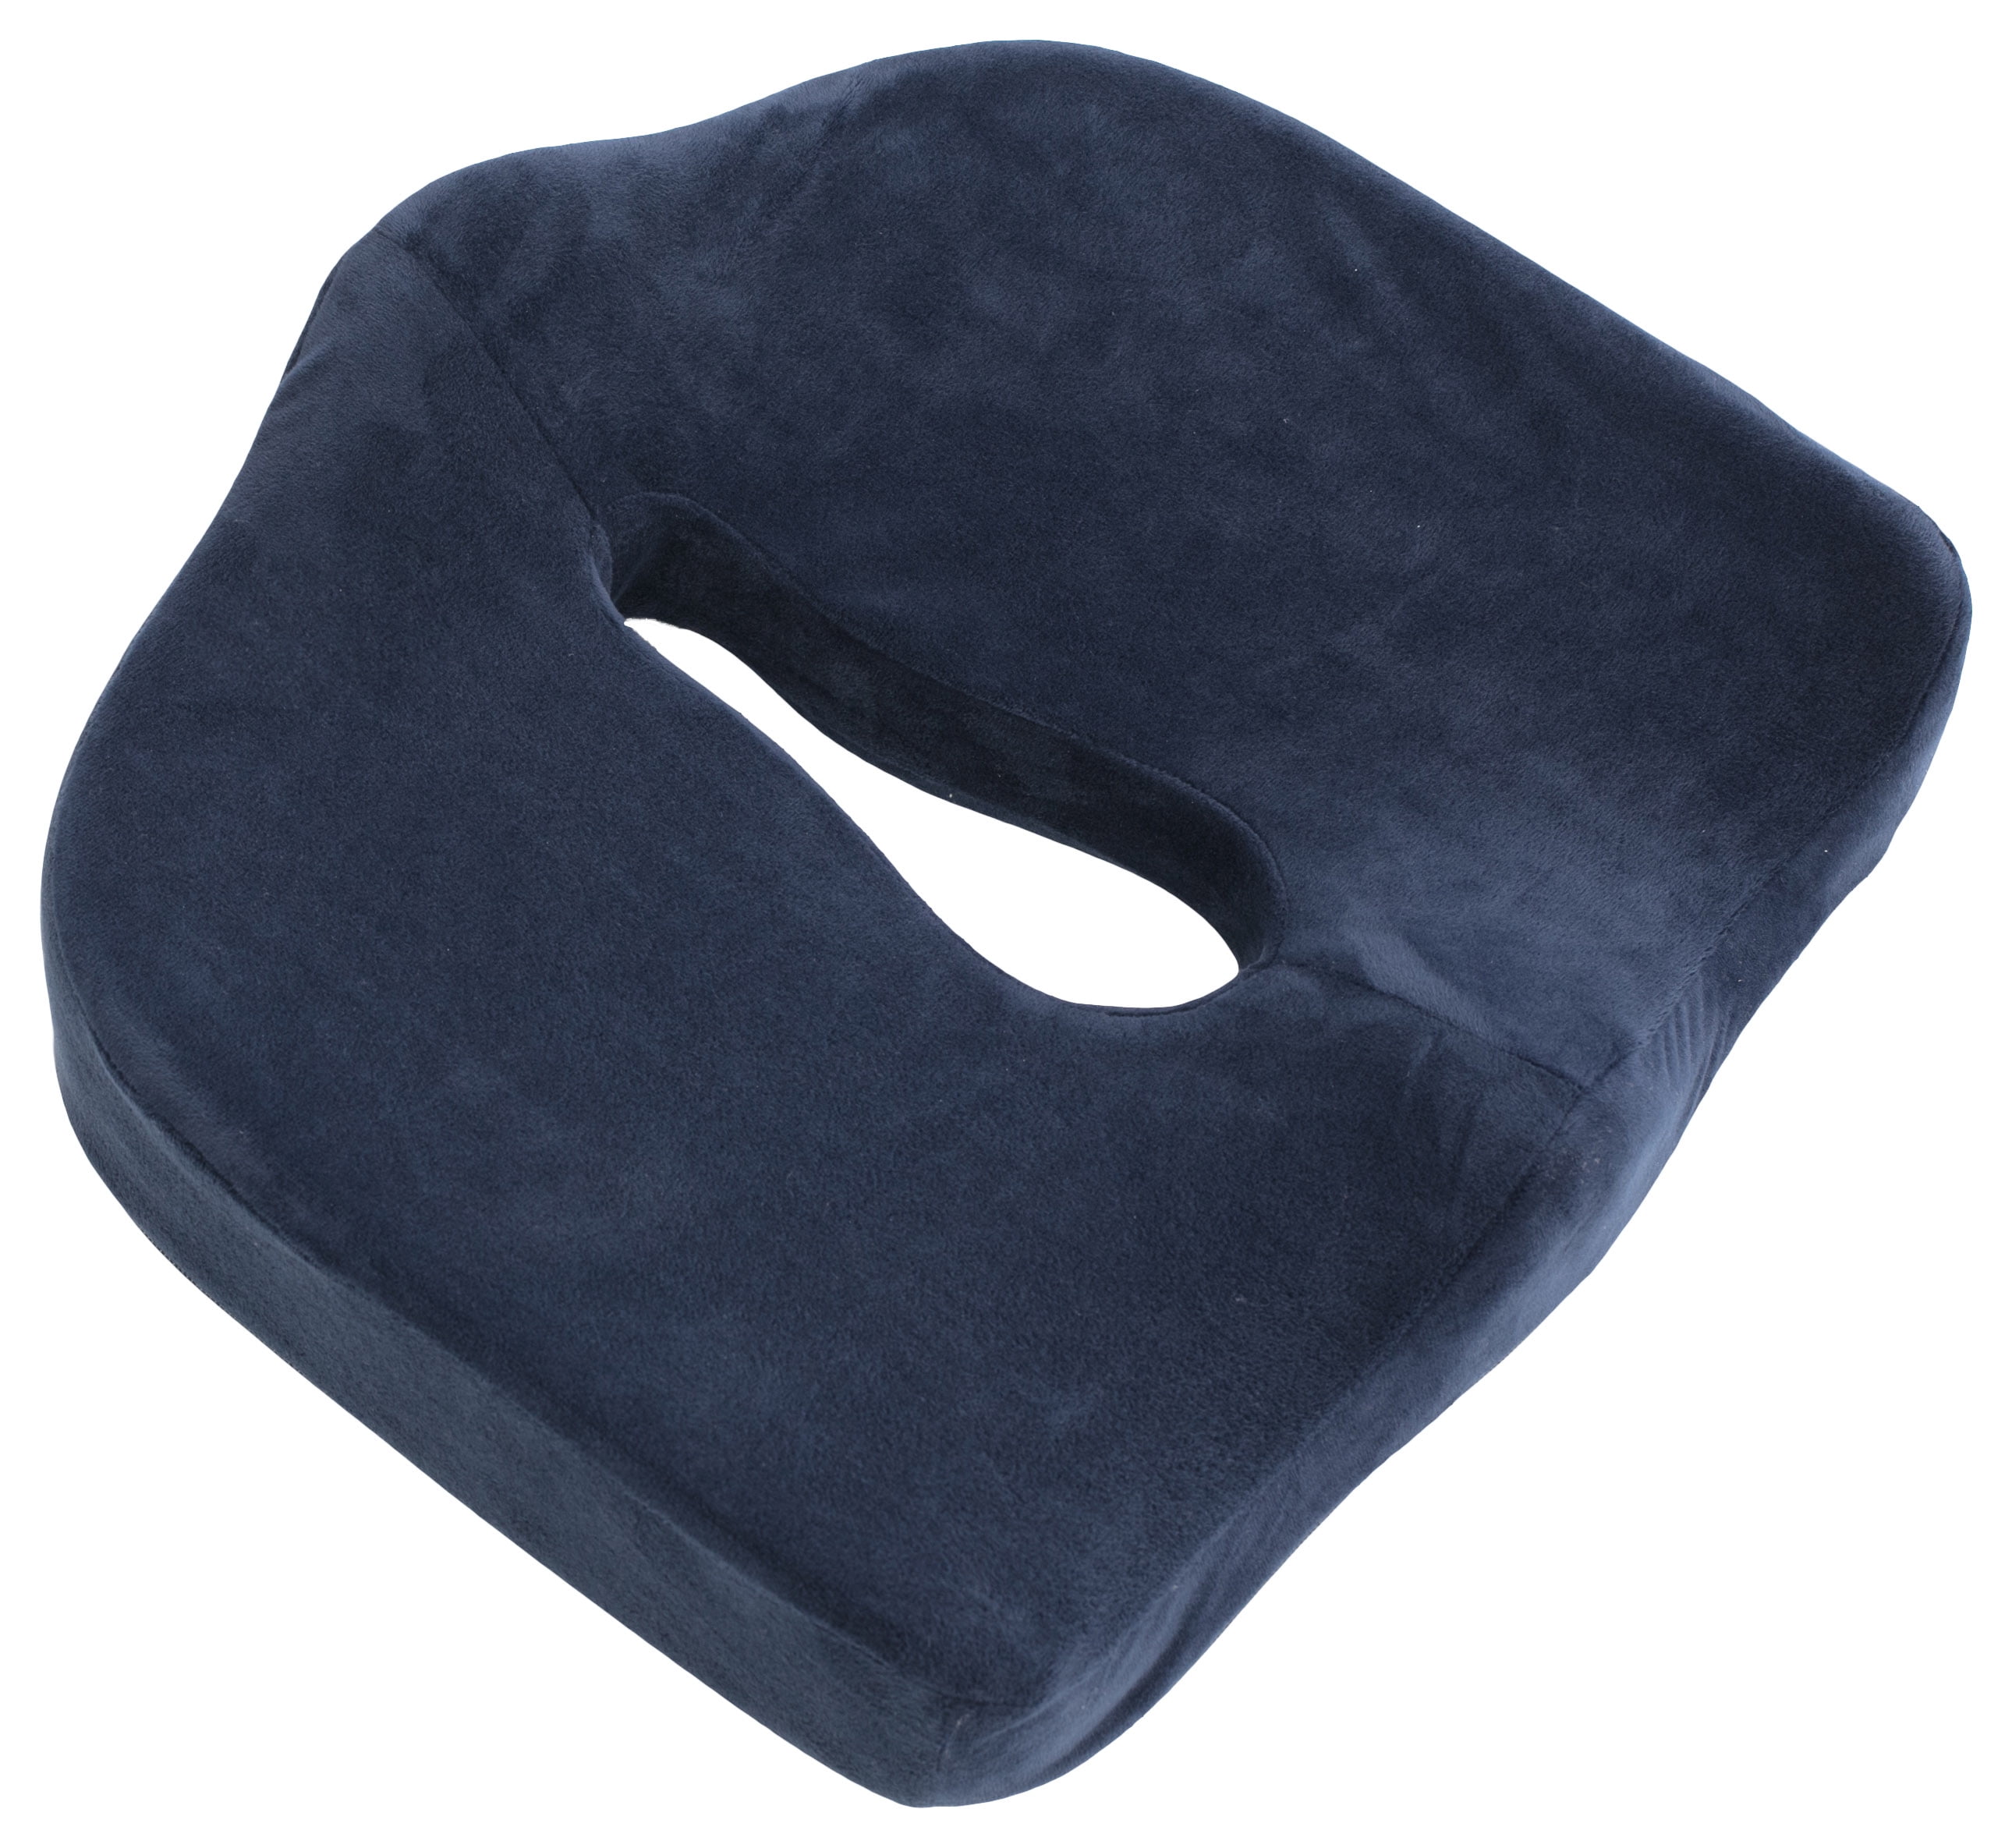 Purenlatex Memory Foam Seat Cushion Lumbar Back Cushion Combo Orthopedic  Design for Tailbone Pain and Can Help Sciatica Set of 2